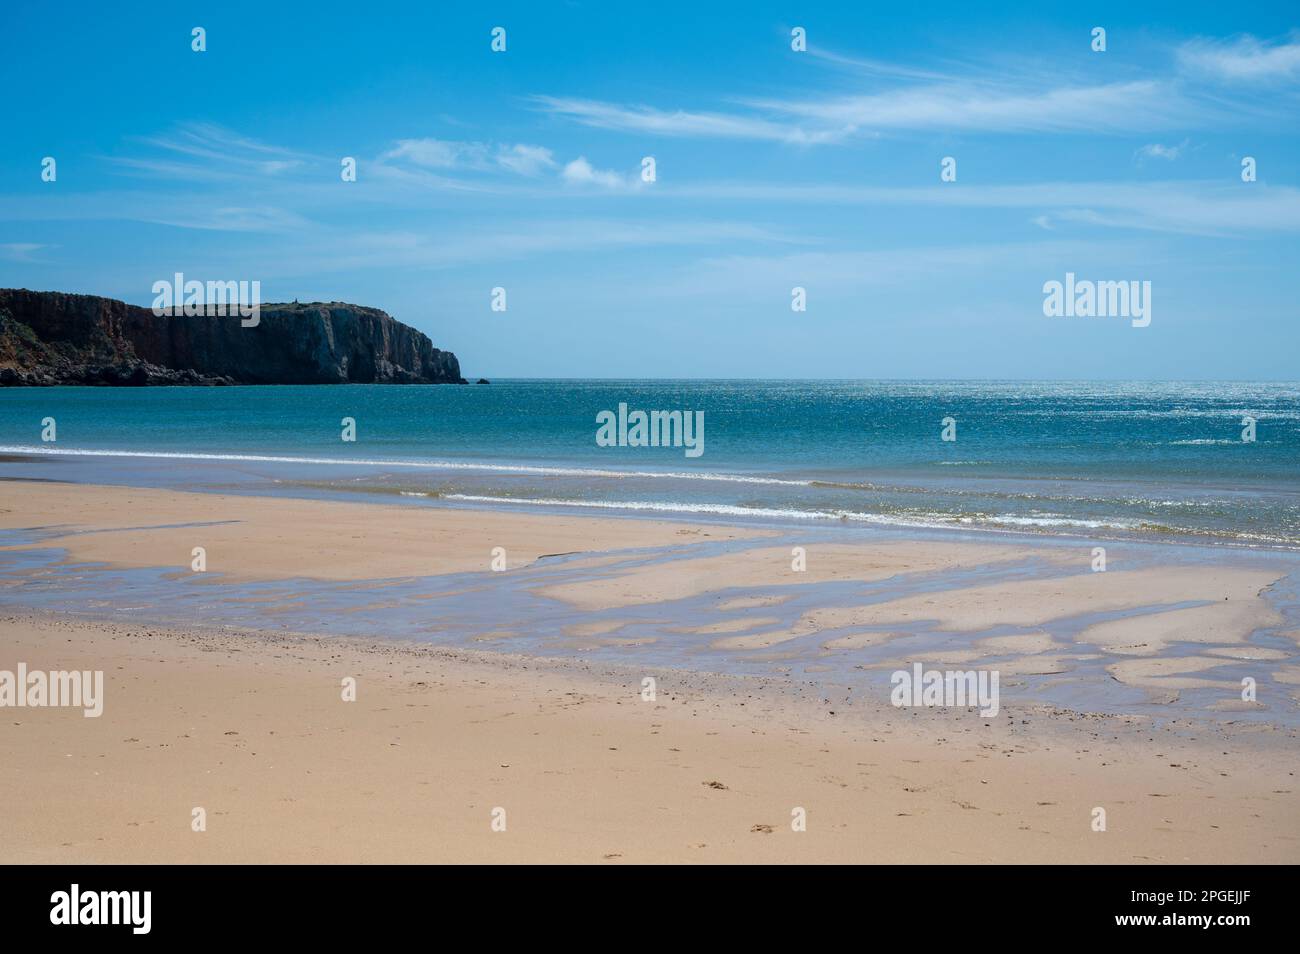 A view of the beach and coast around Sagres  and Praia da Mareta, the Algarve, Portugal Stock Photo